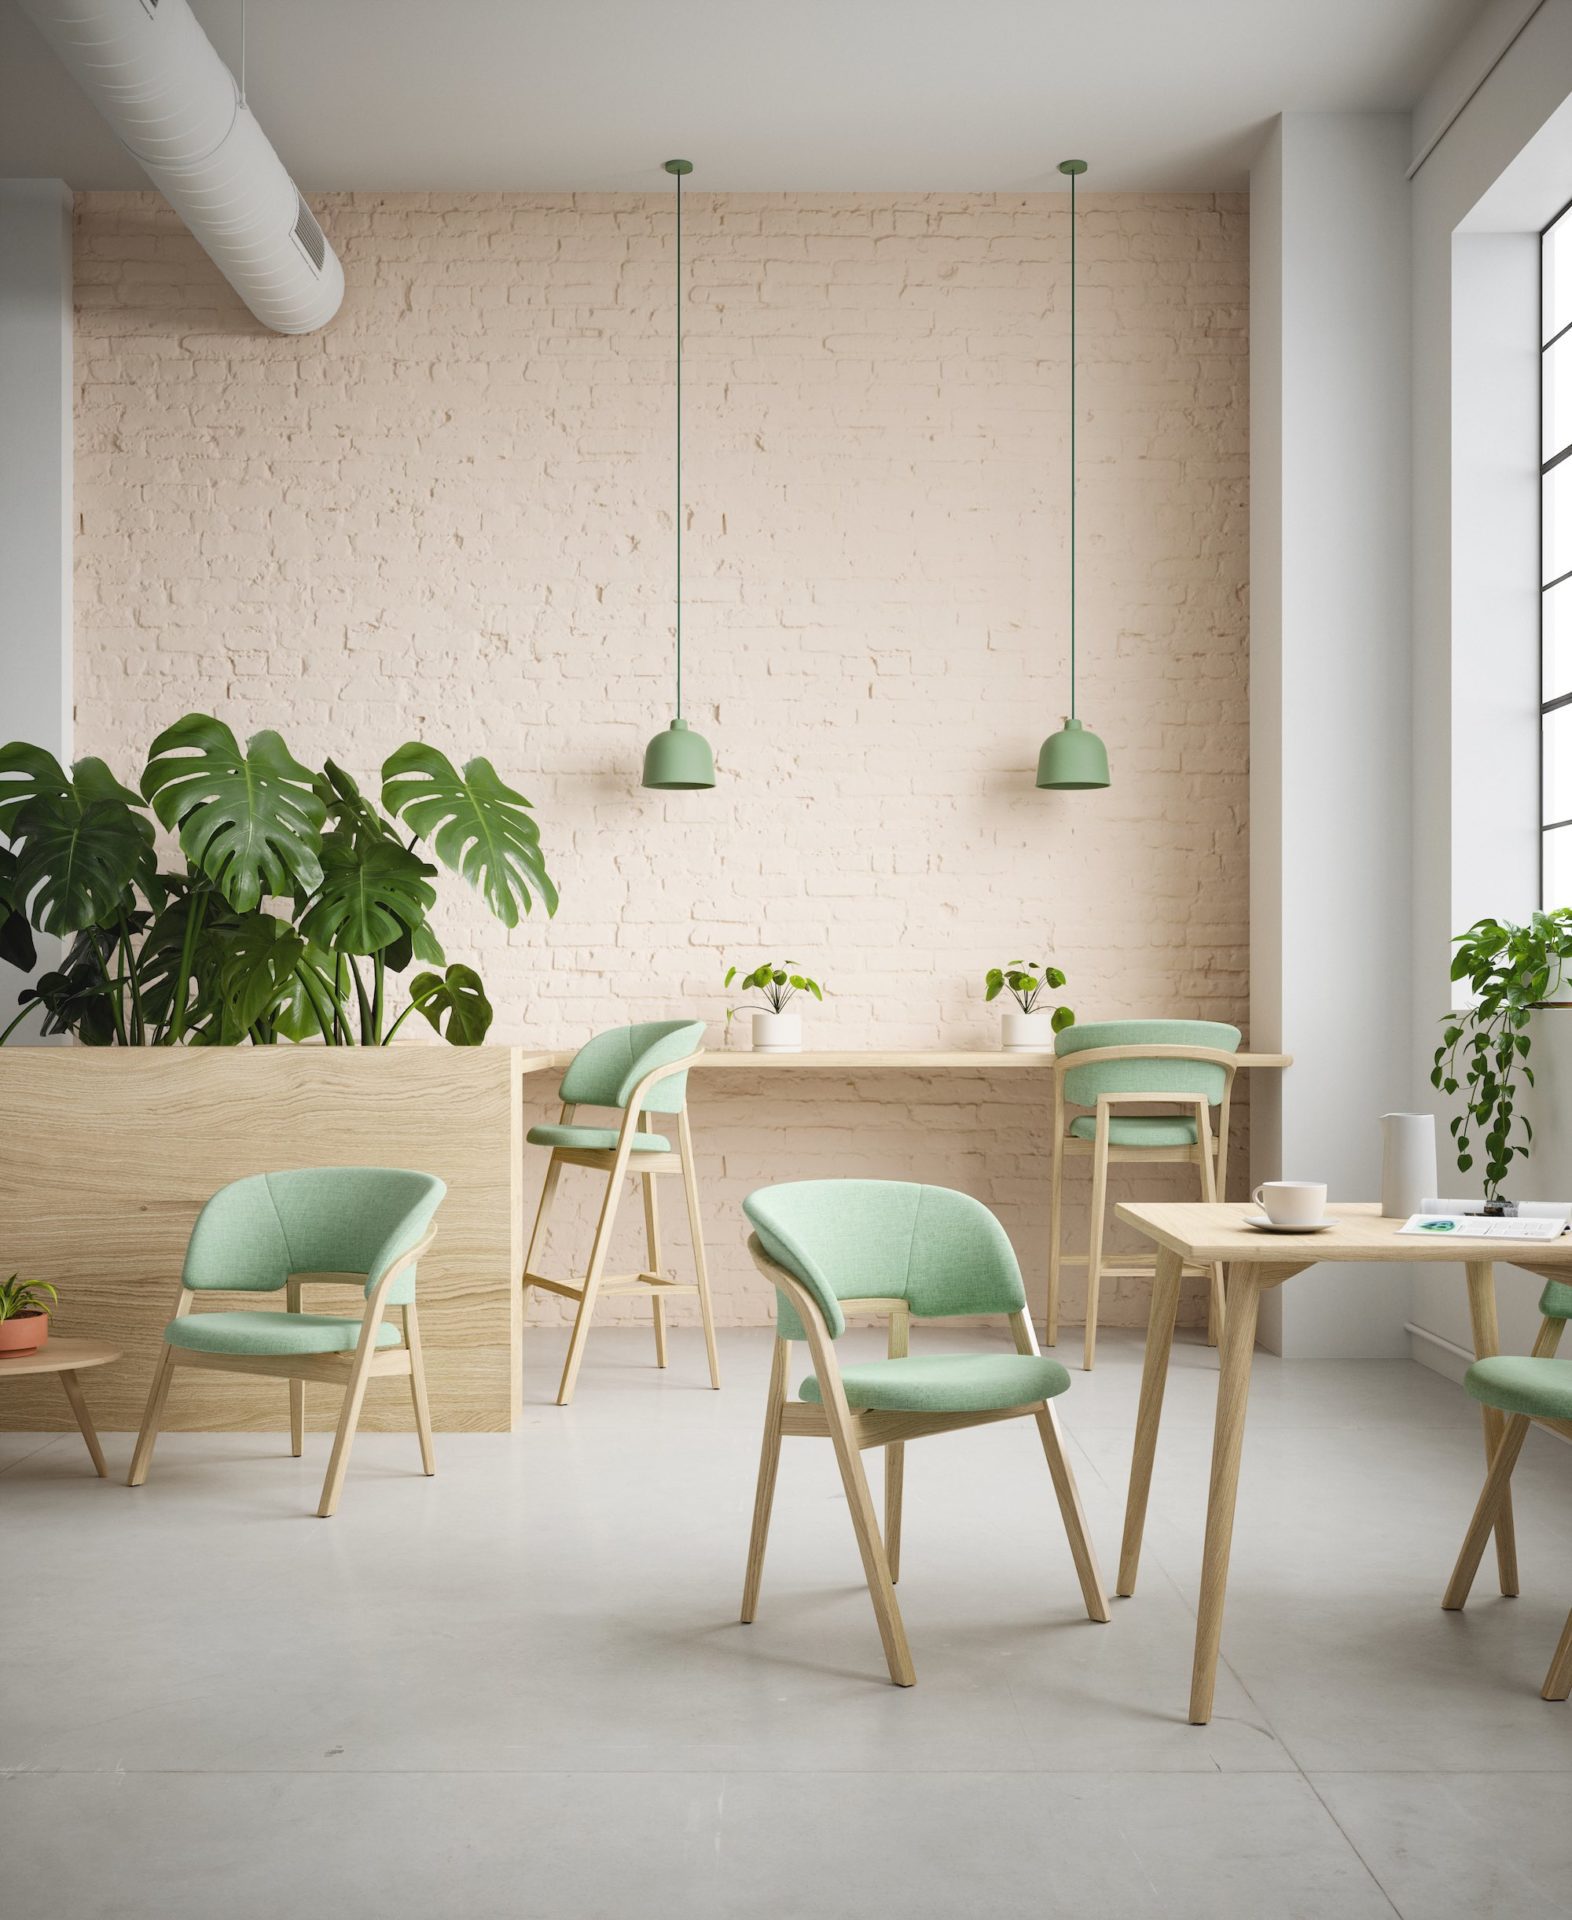 Design London Green Chairs